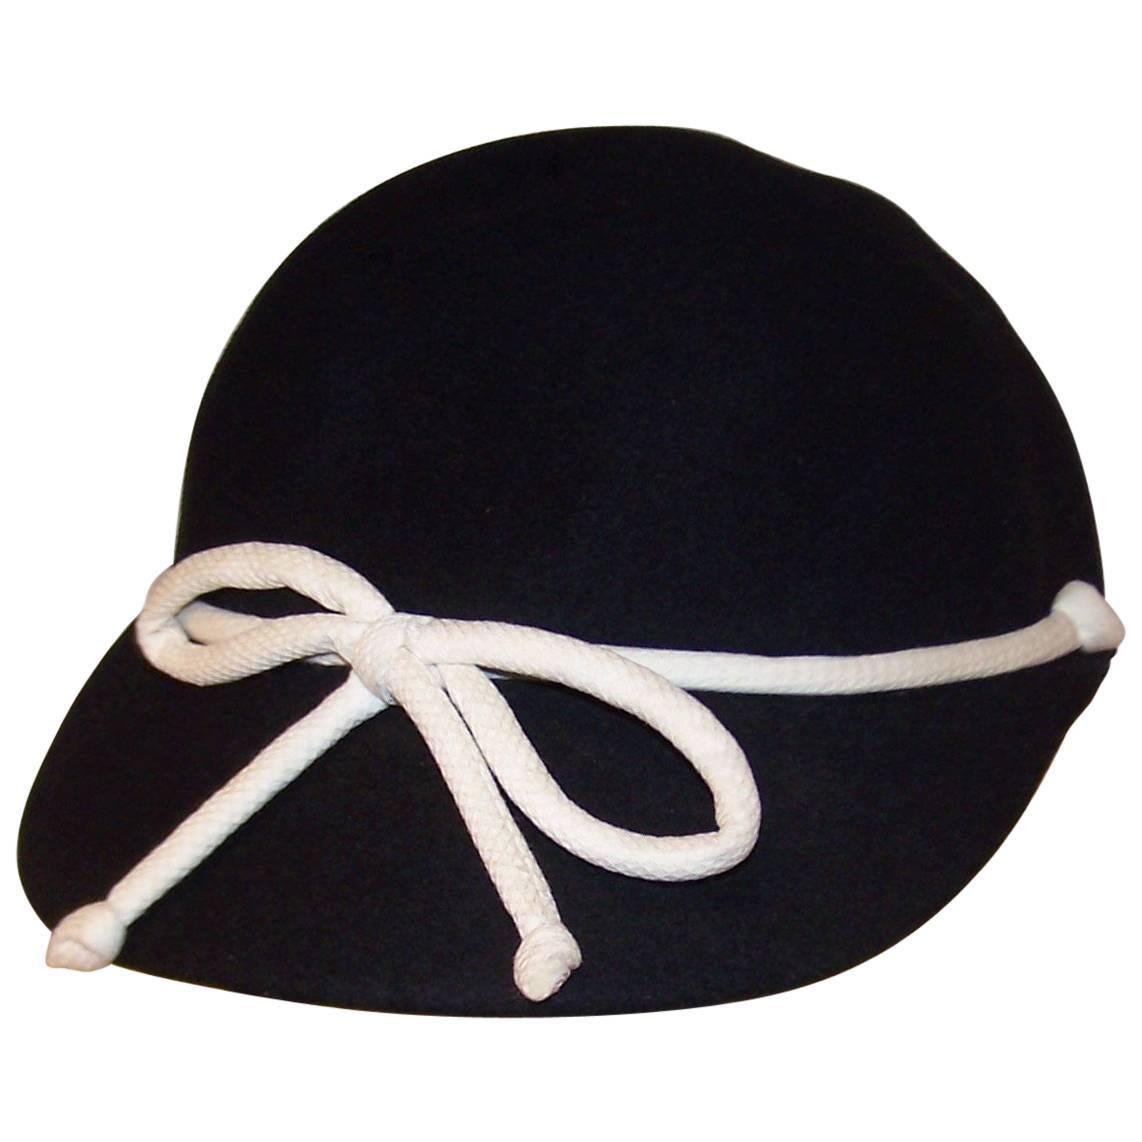 C.1960 Henry Pollak Black Wool & White Pique Cap Style Hat